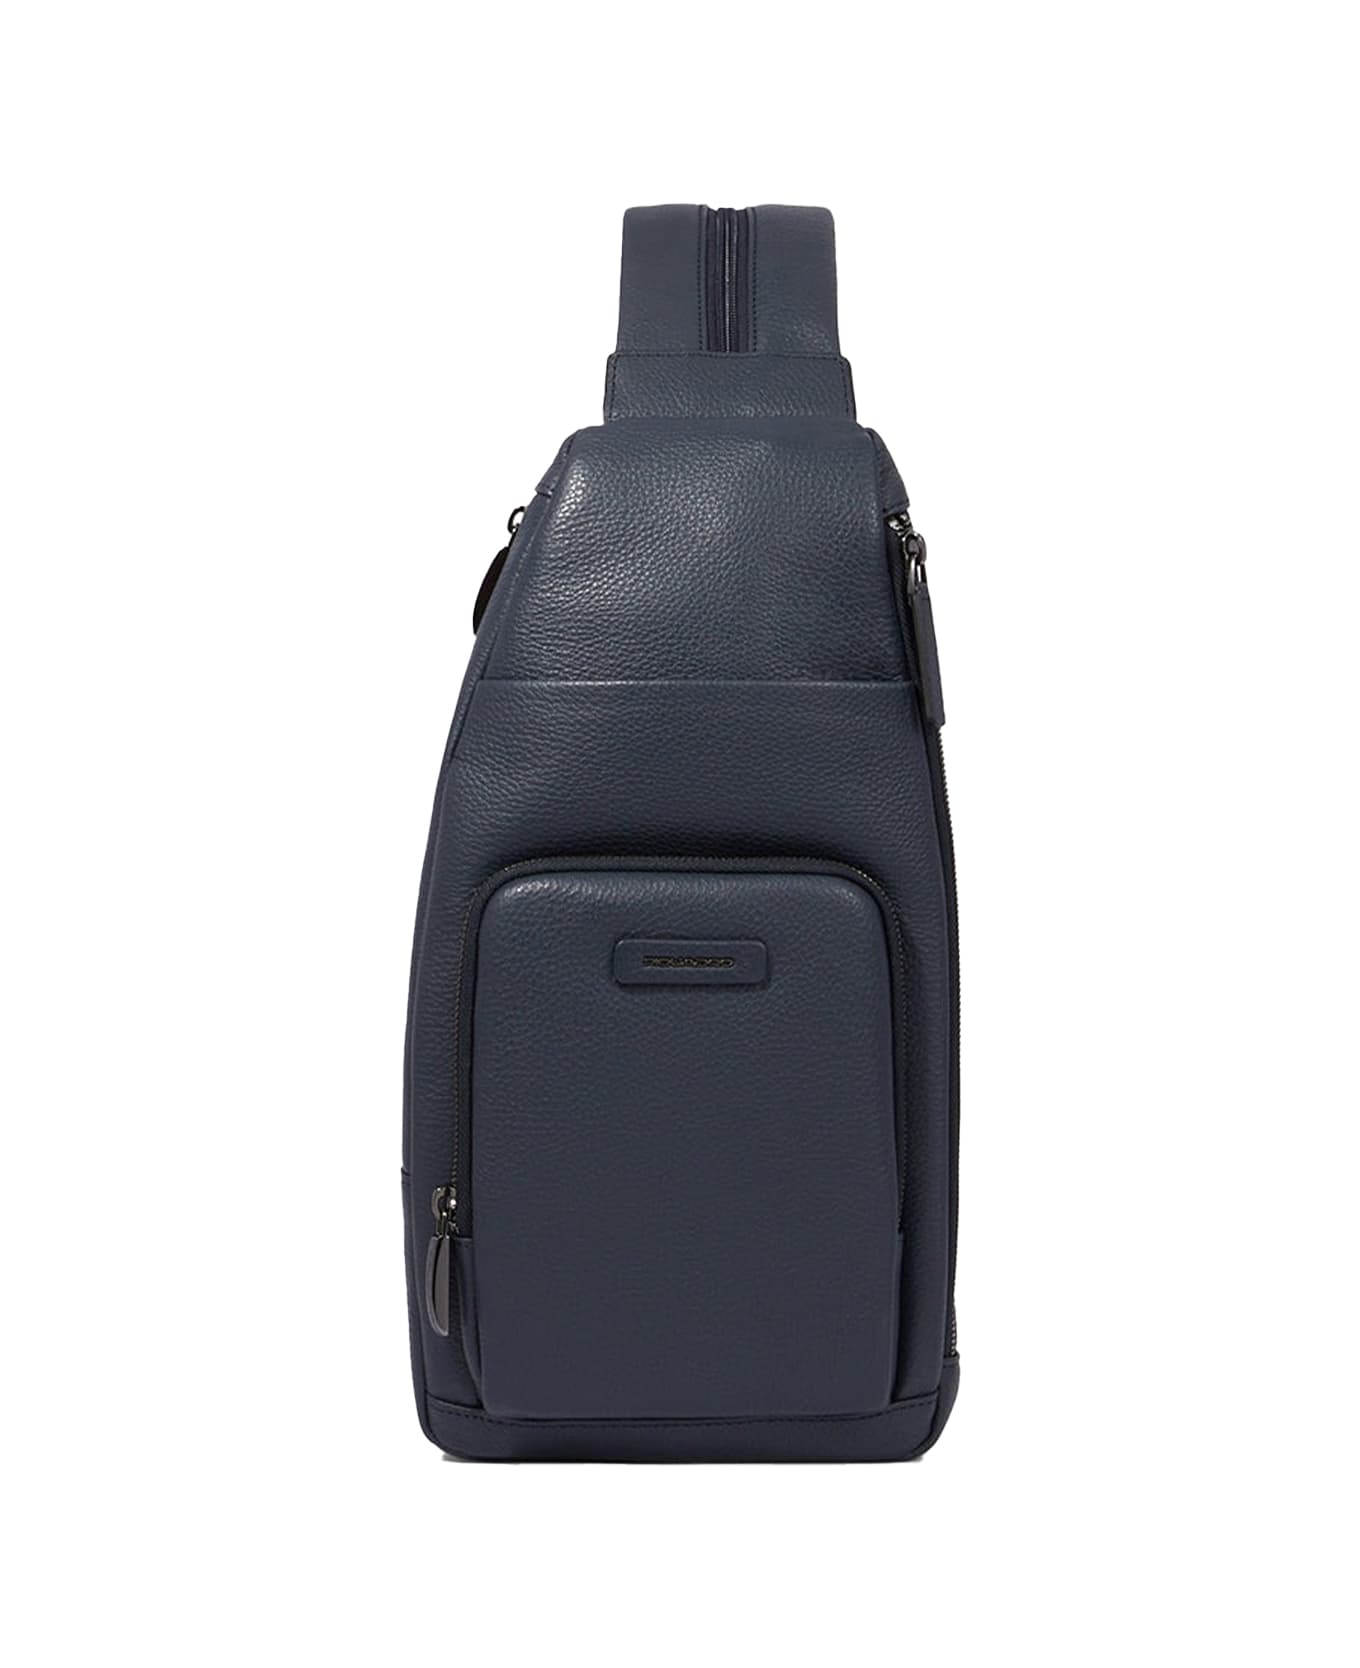 Piquadro Shoulder Bag For Ipad Mini, Portable As A Backpack - Blu